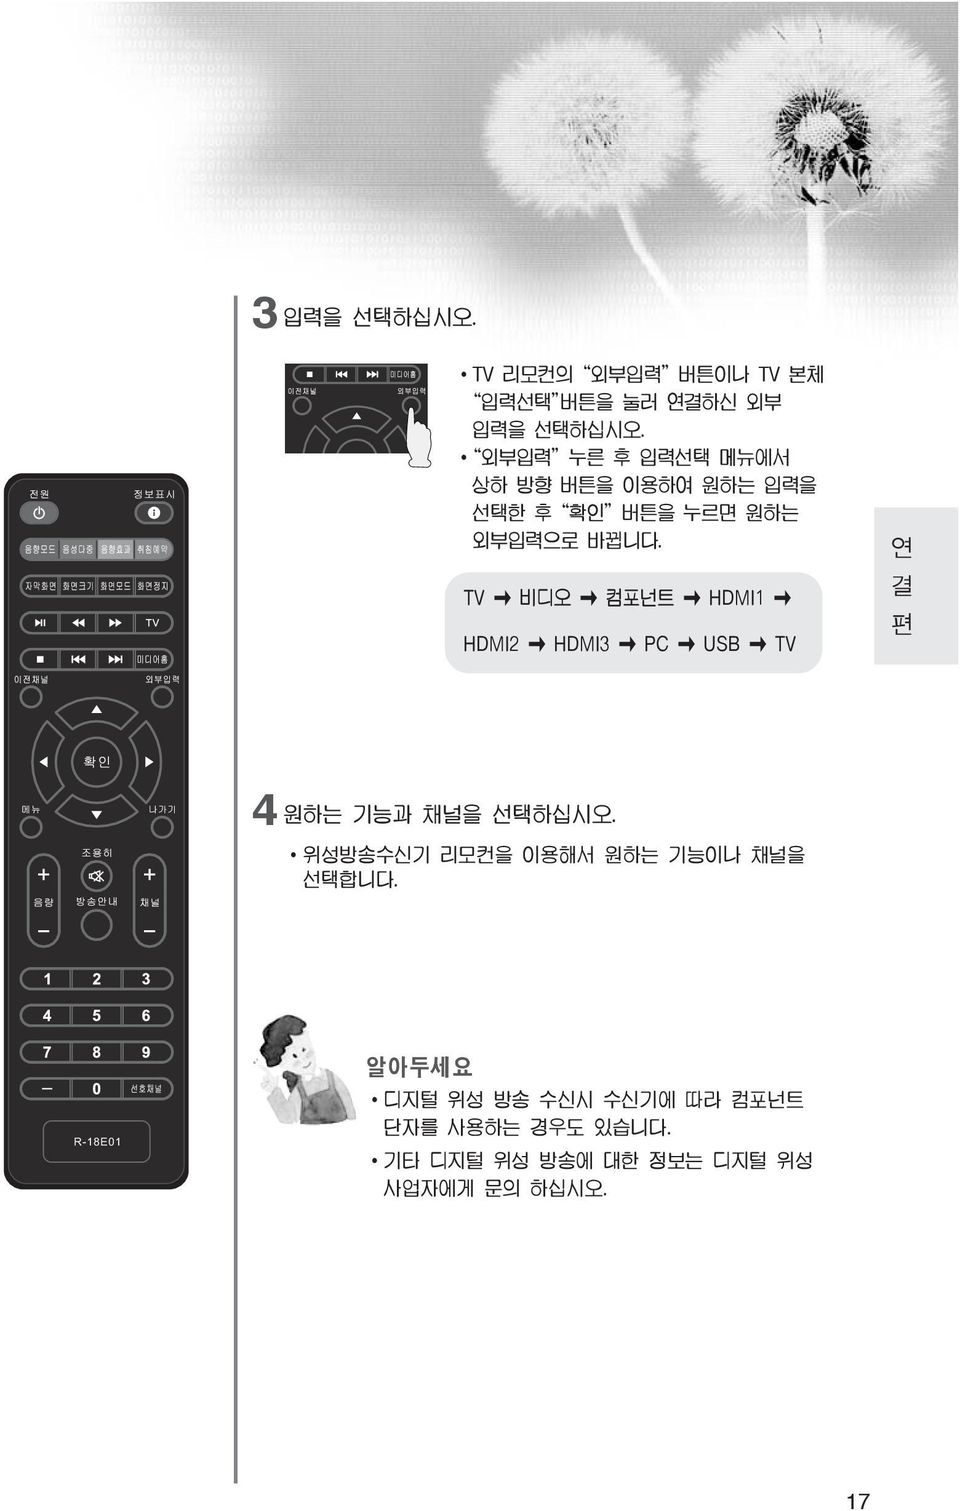 TV 비디오 컴포넌트 HDMI1 HDMI2 HDMI3 PC USB TV 연 결 편 4 원하는 기능과 채널을 선택하십시오.